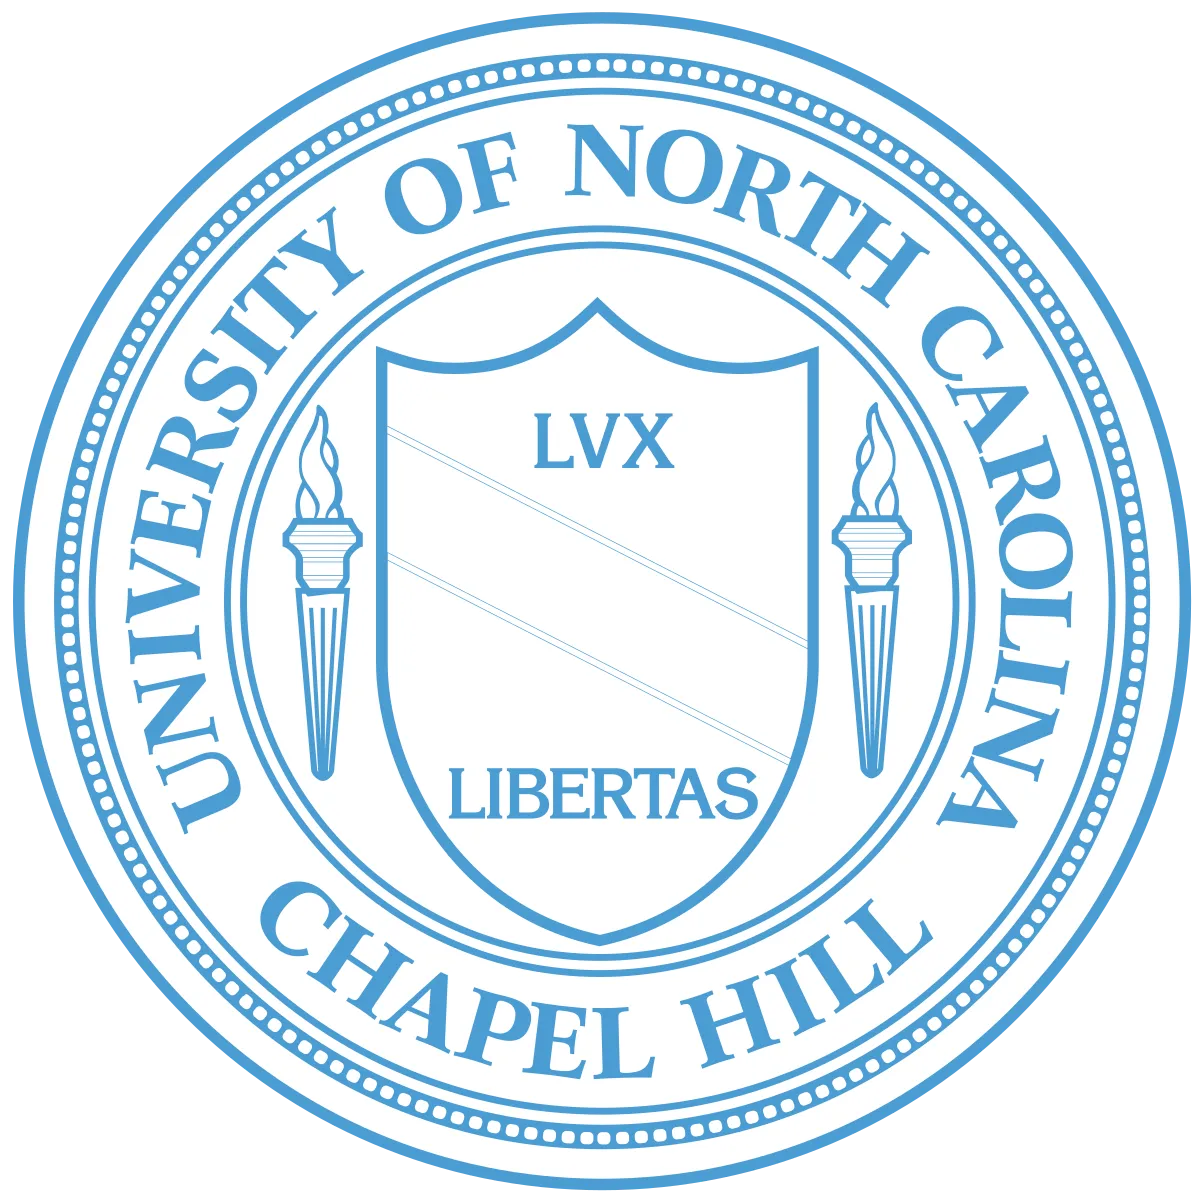 University of North Carolina at Chapel Hill (UNC)  